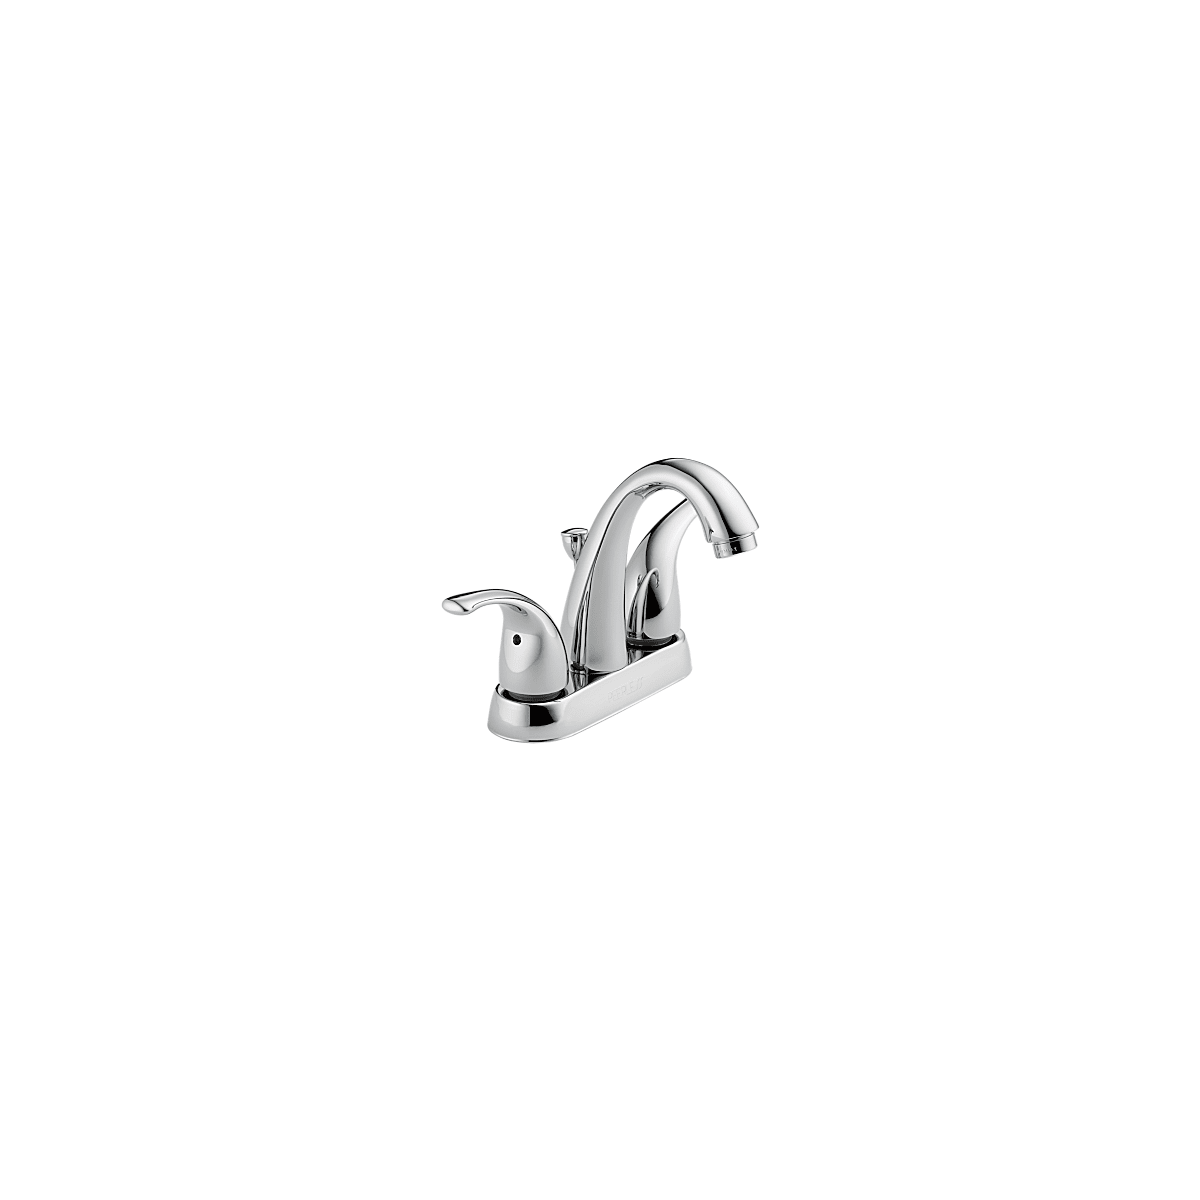 Peerless P299695lf Chrome Bathroom Faucet Centerset With Ergonomic